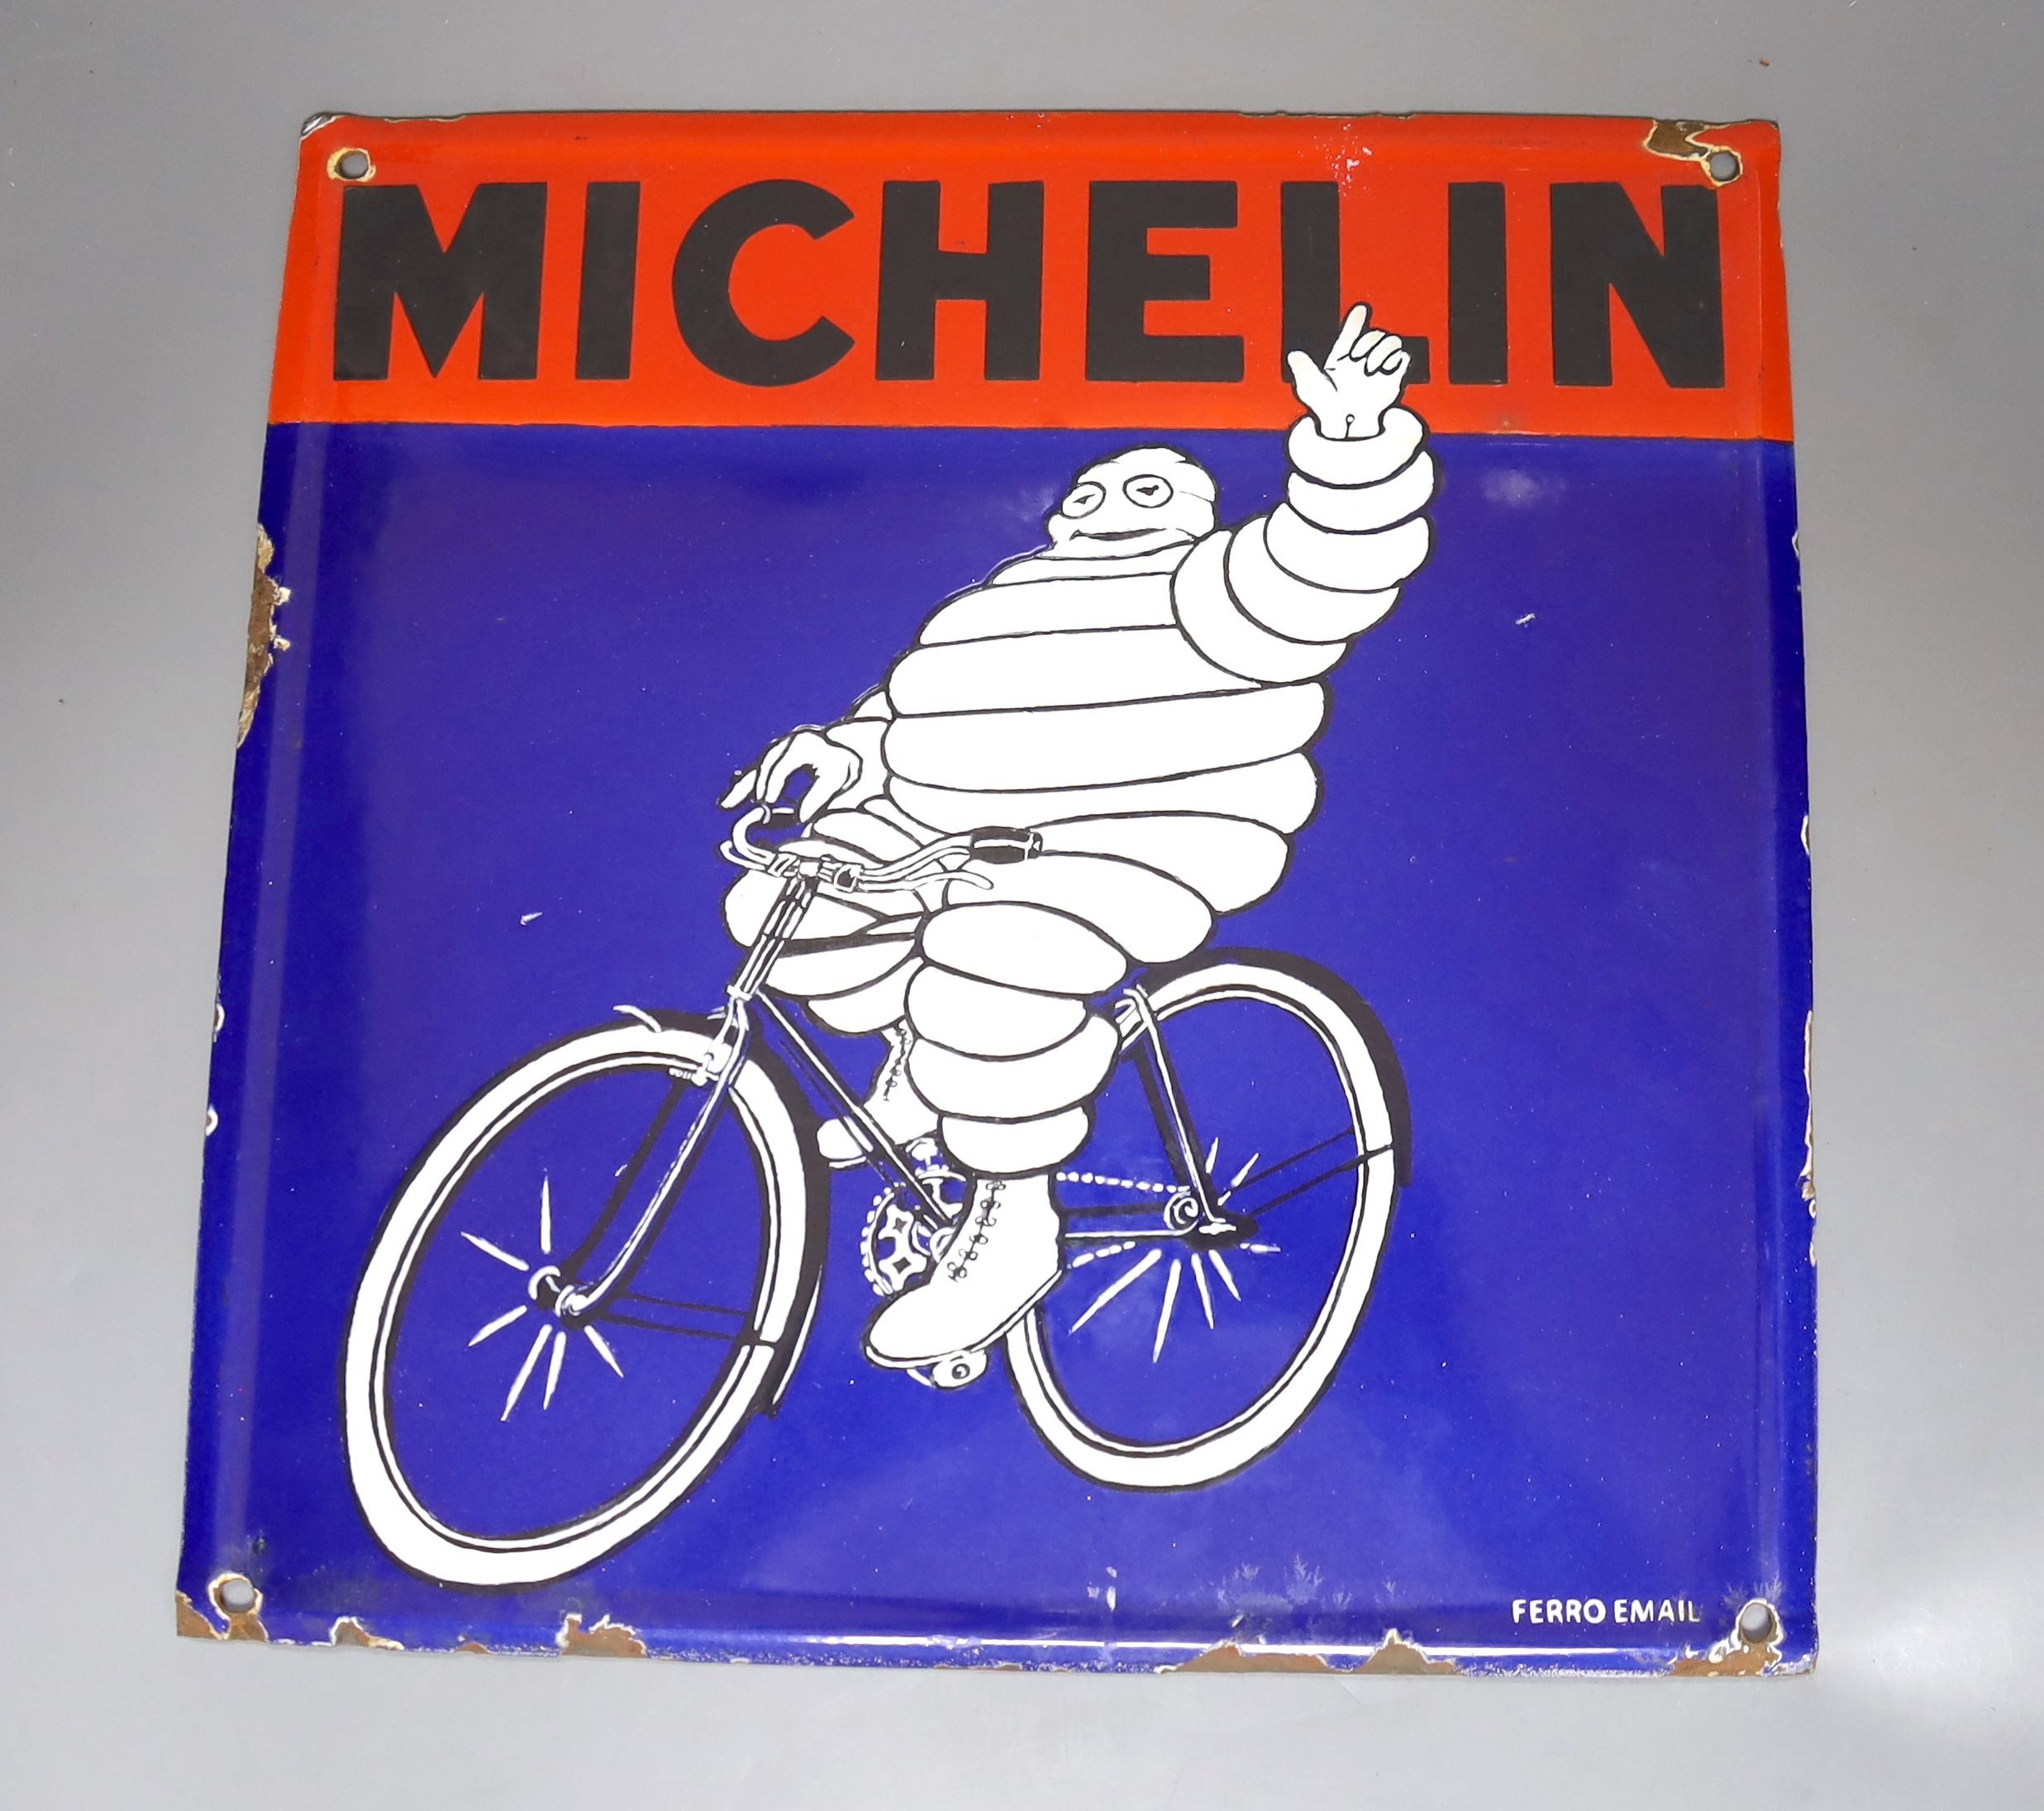 A Michelin enamel sign, 30 x 30cm